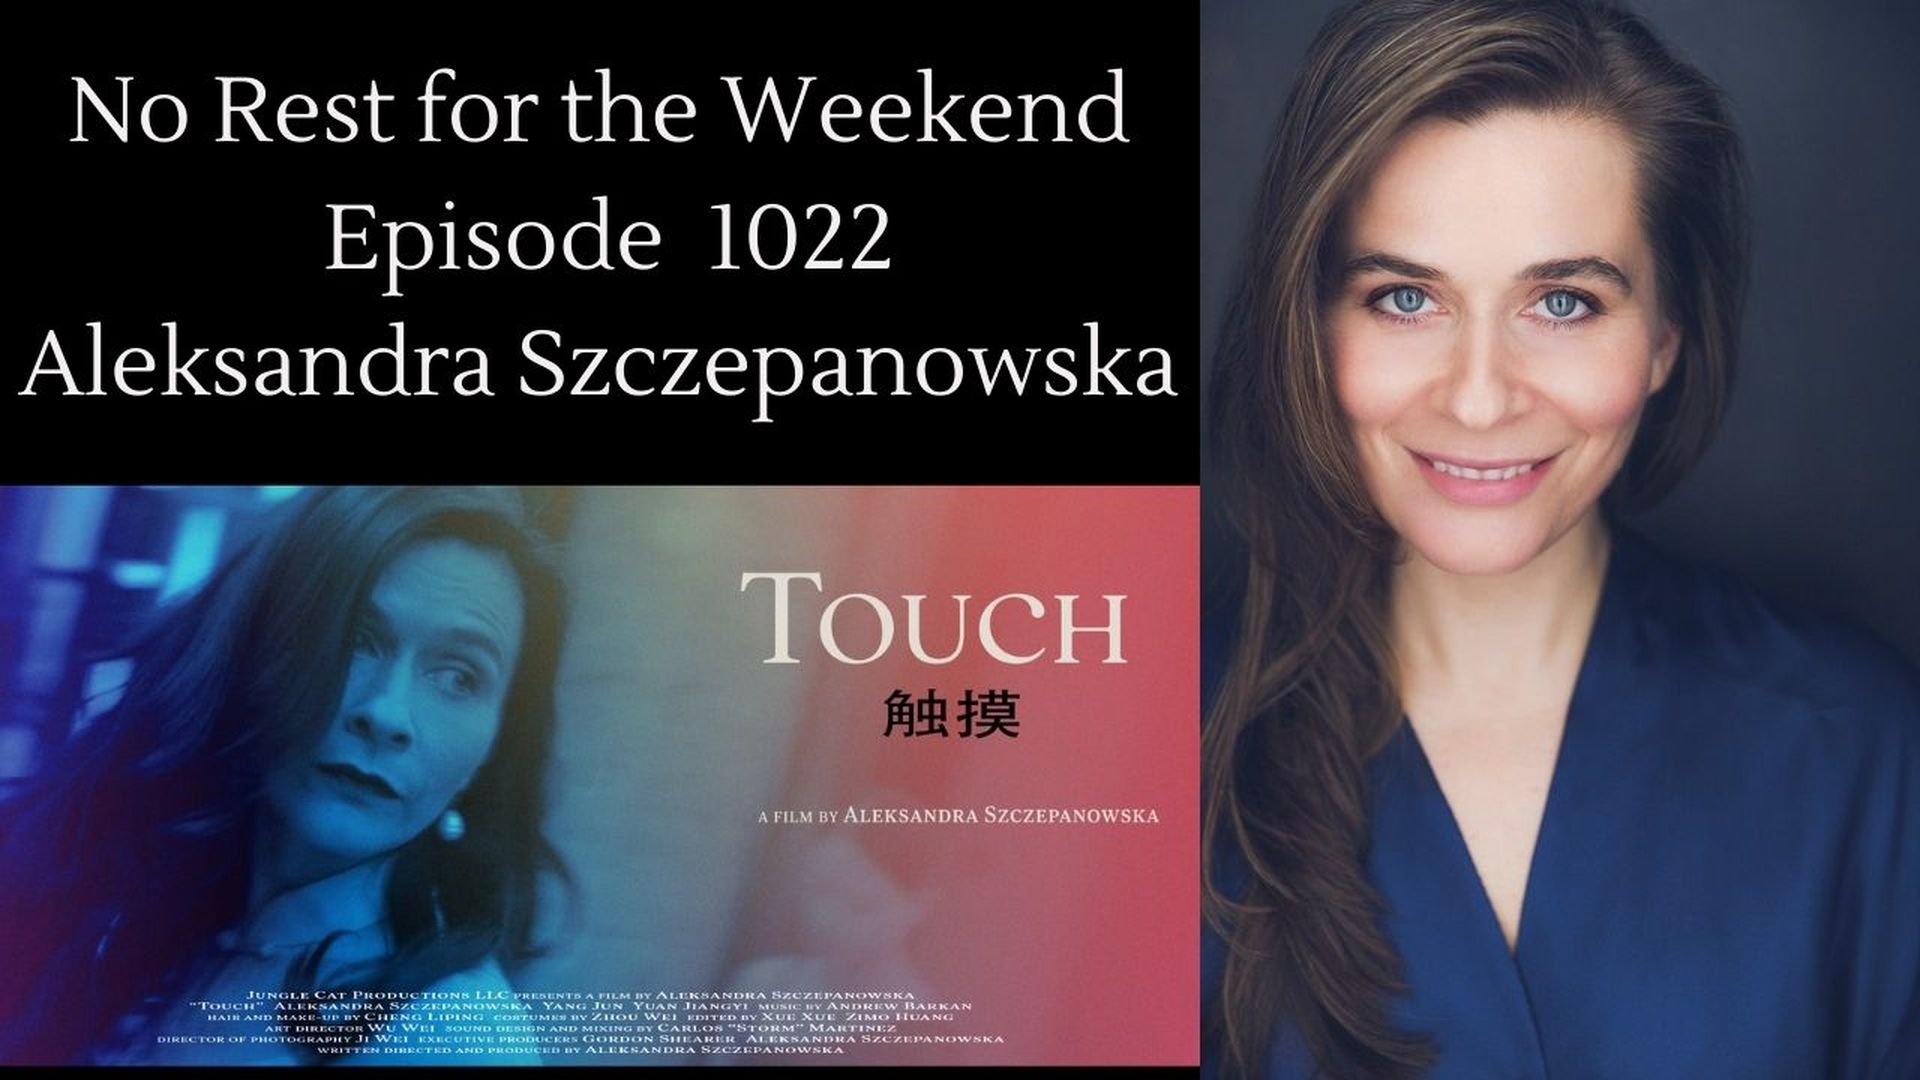 Episode 1022: Aleksandra Szcepanowska